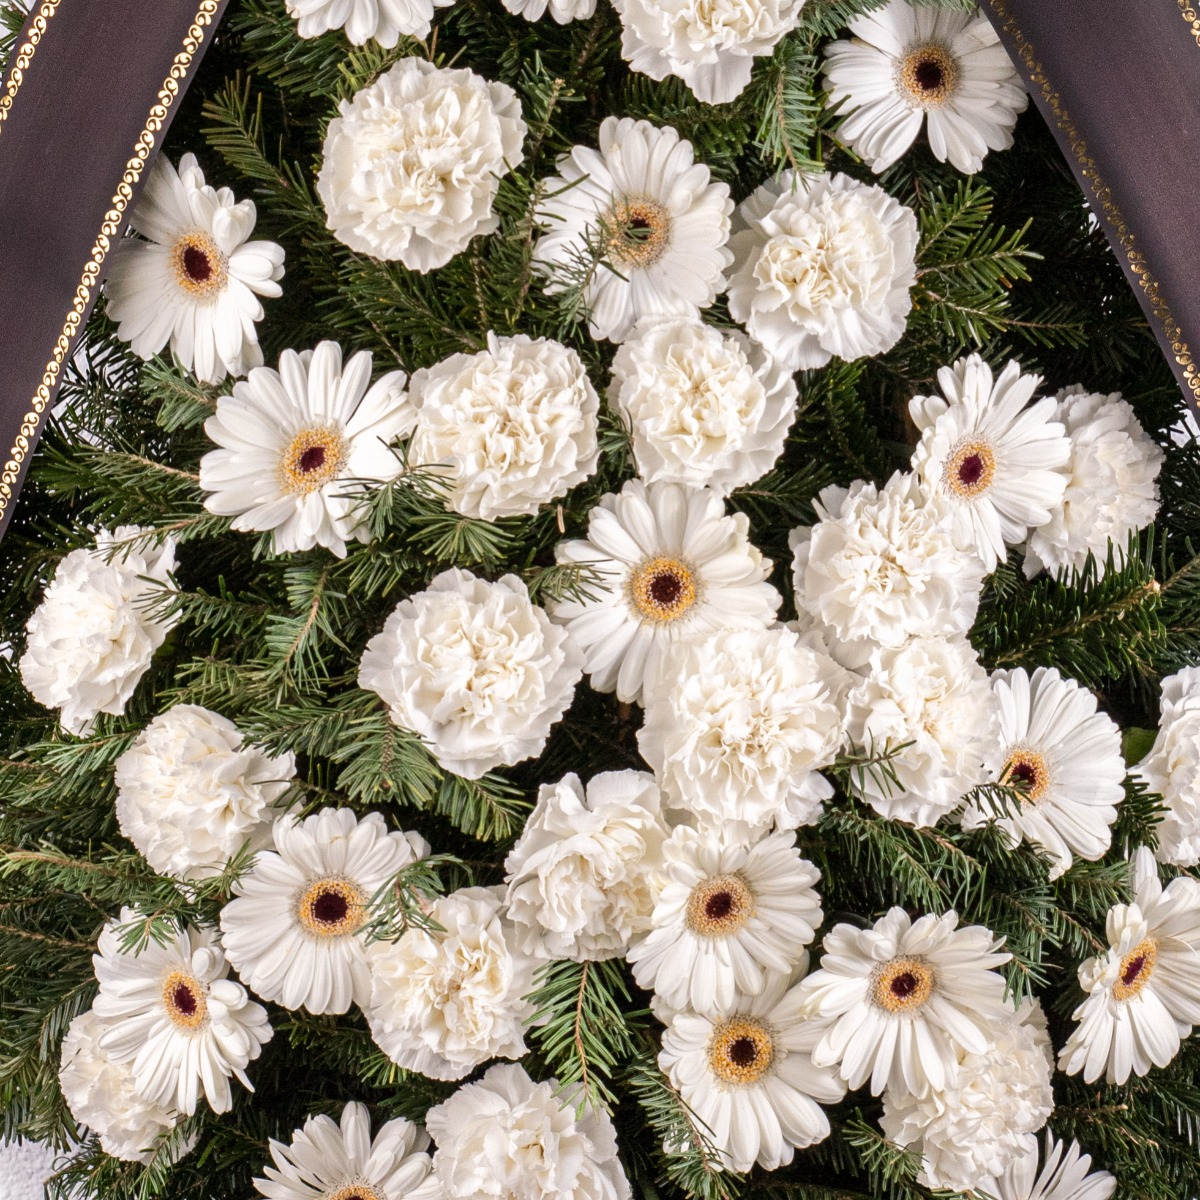 Coroana Funerara cu flori albe clasice